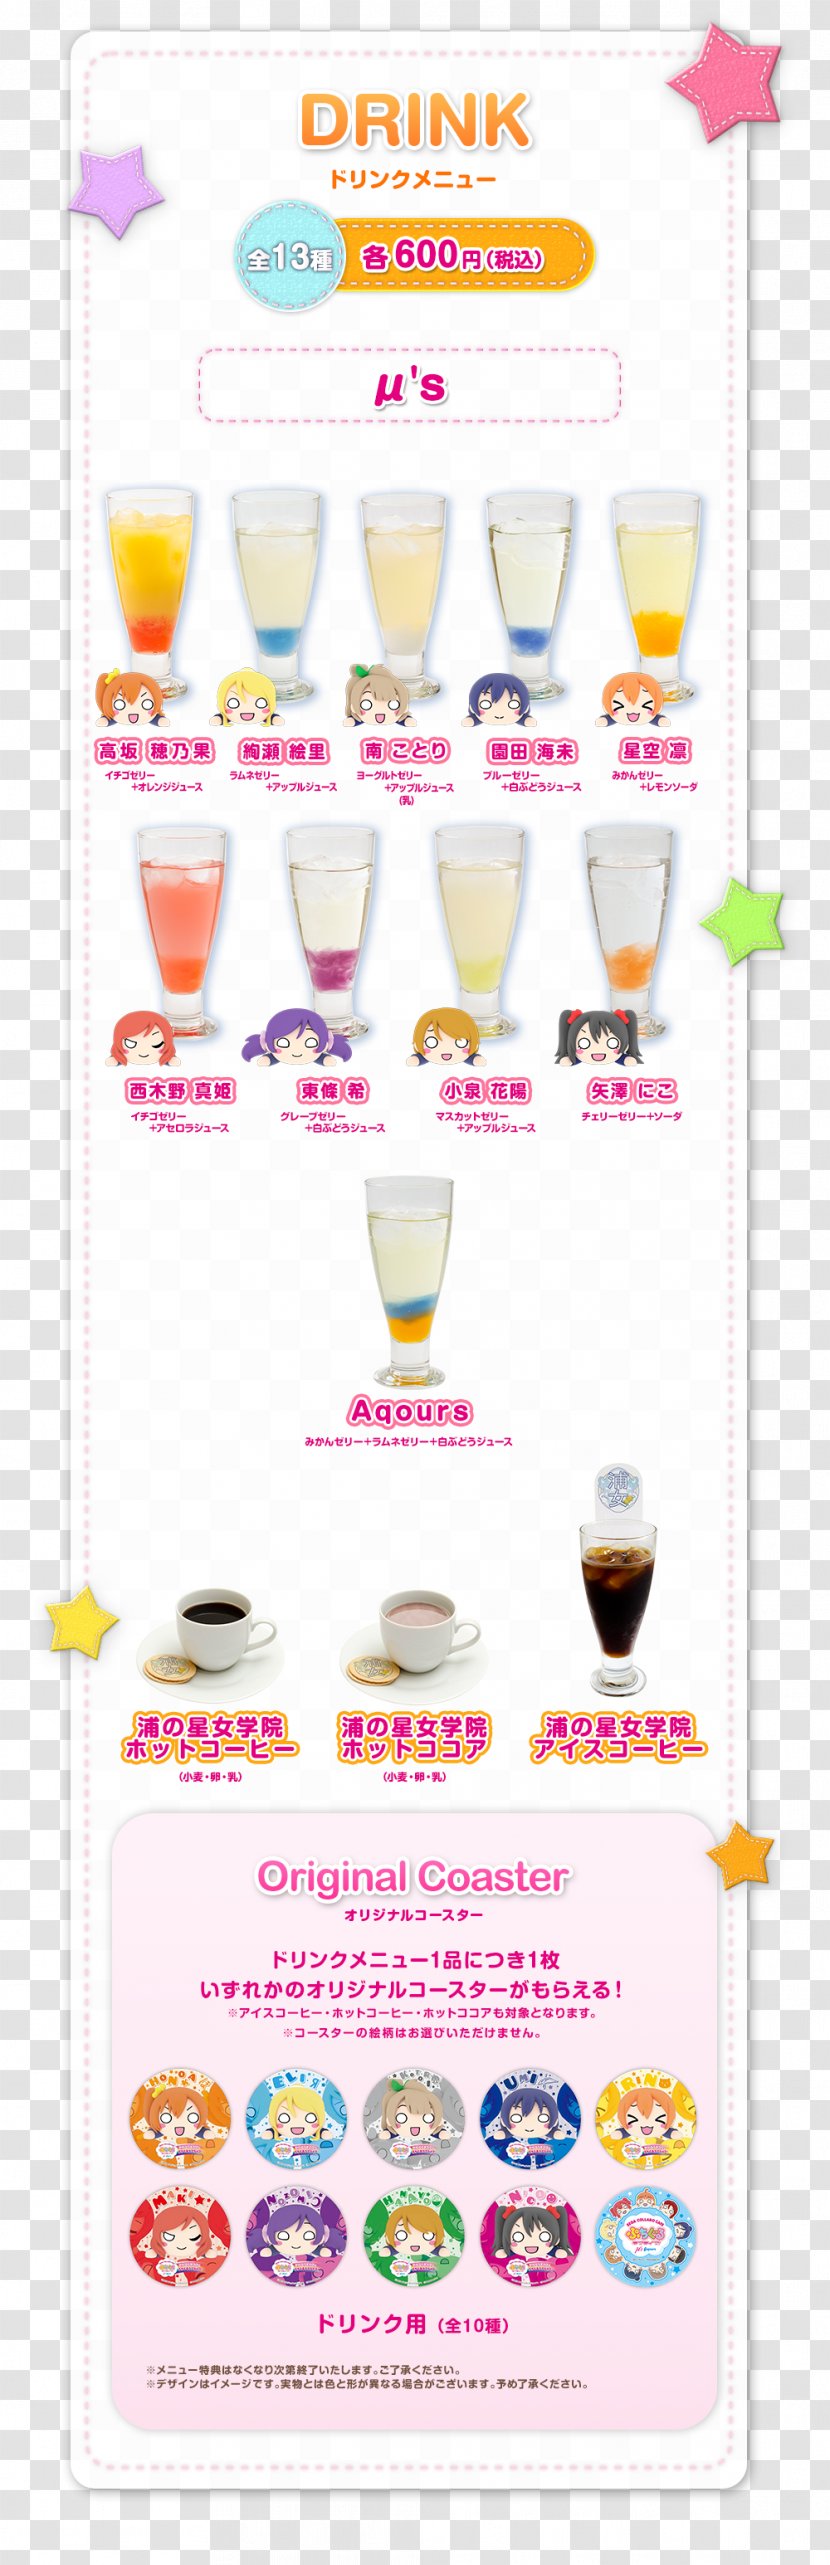 Cafe THE SUN ぷちぐるラブライブ! SEGA Collabocafe Menu - Love Live - DRINK Transparent PNG